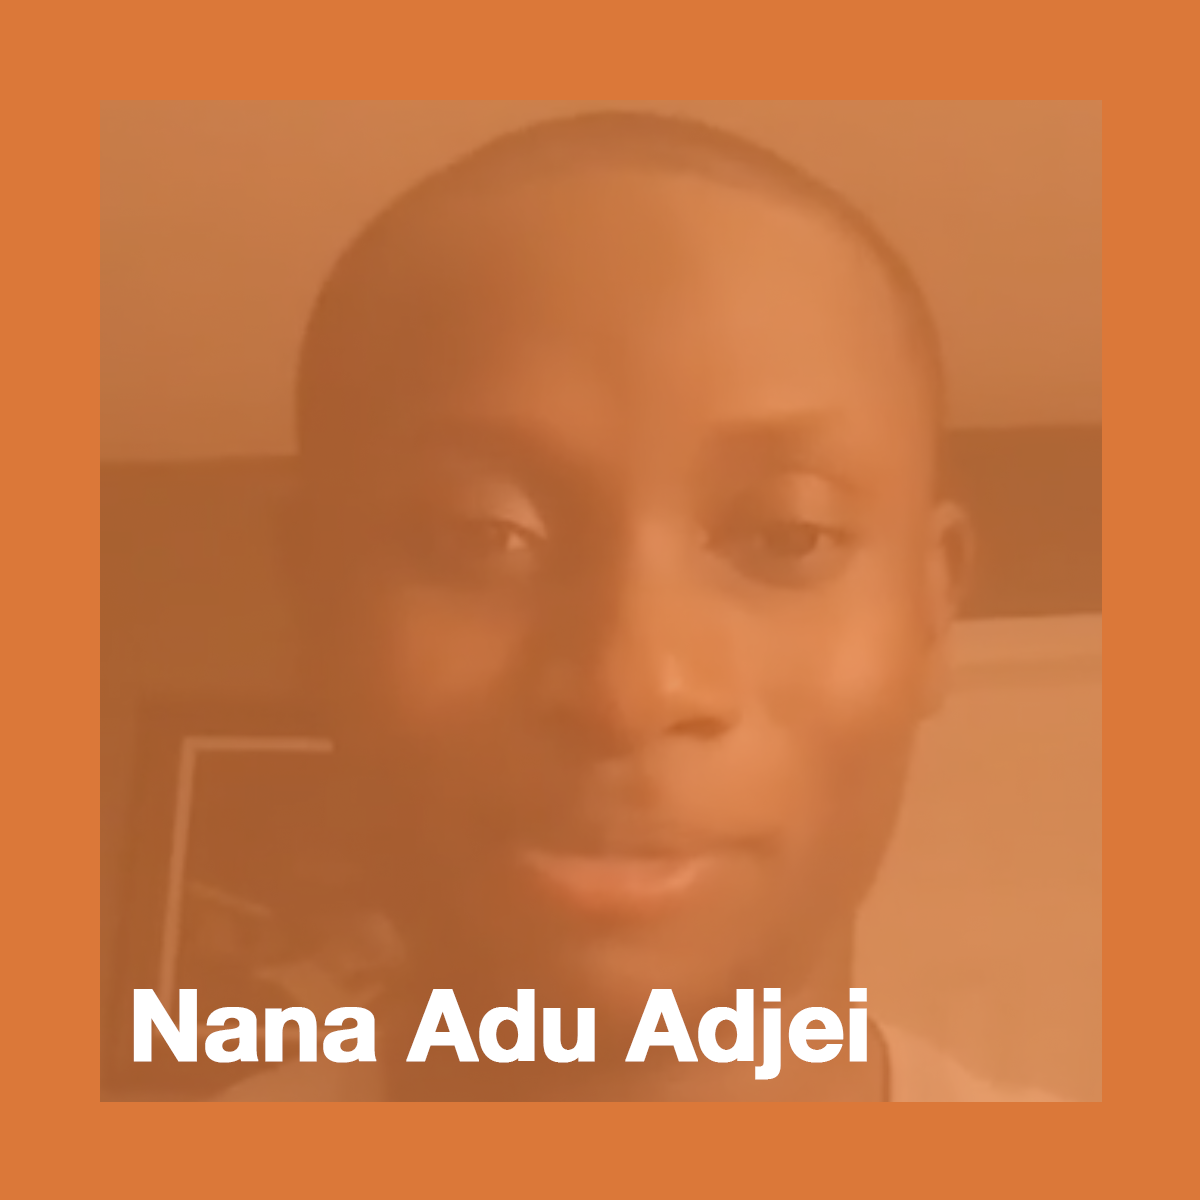 Nana Adu Adjei, dental scholar. He is smiling at the camera.